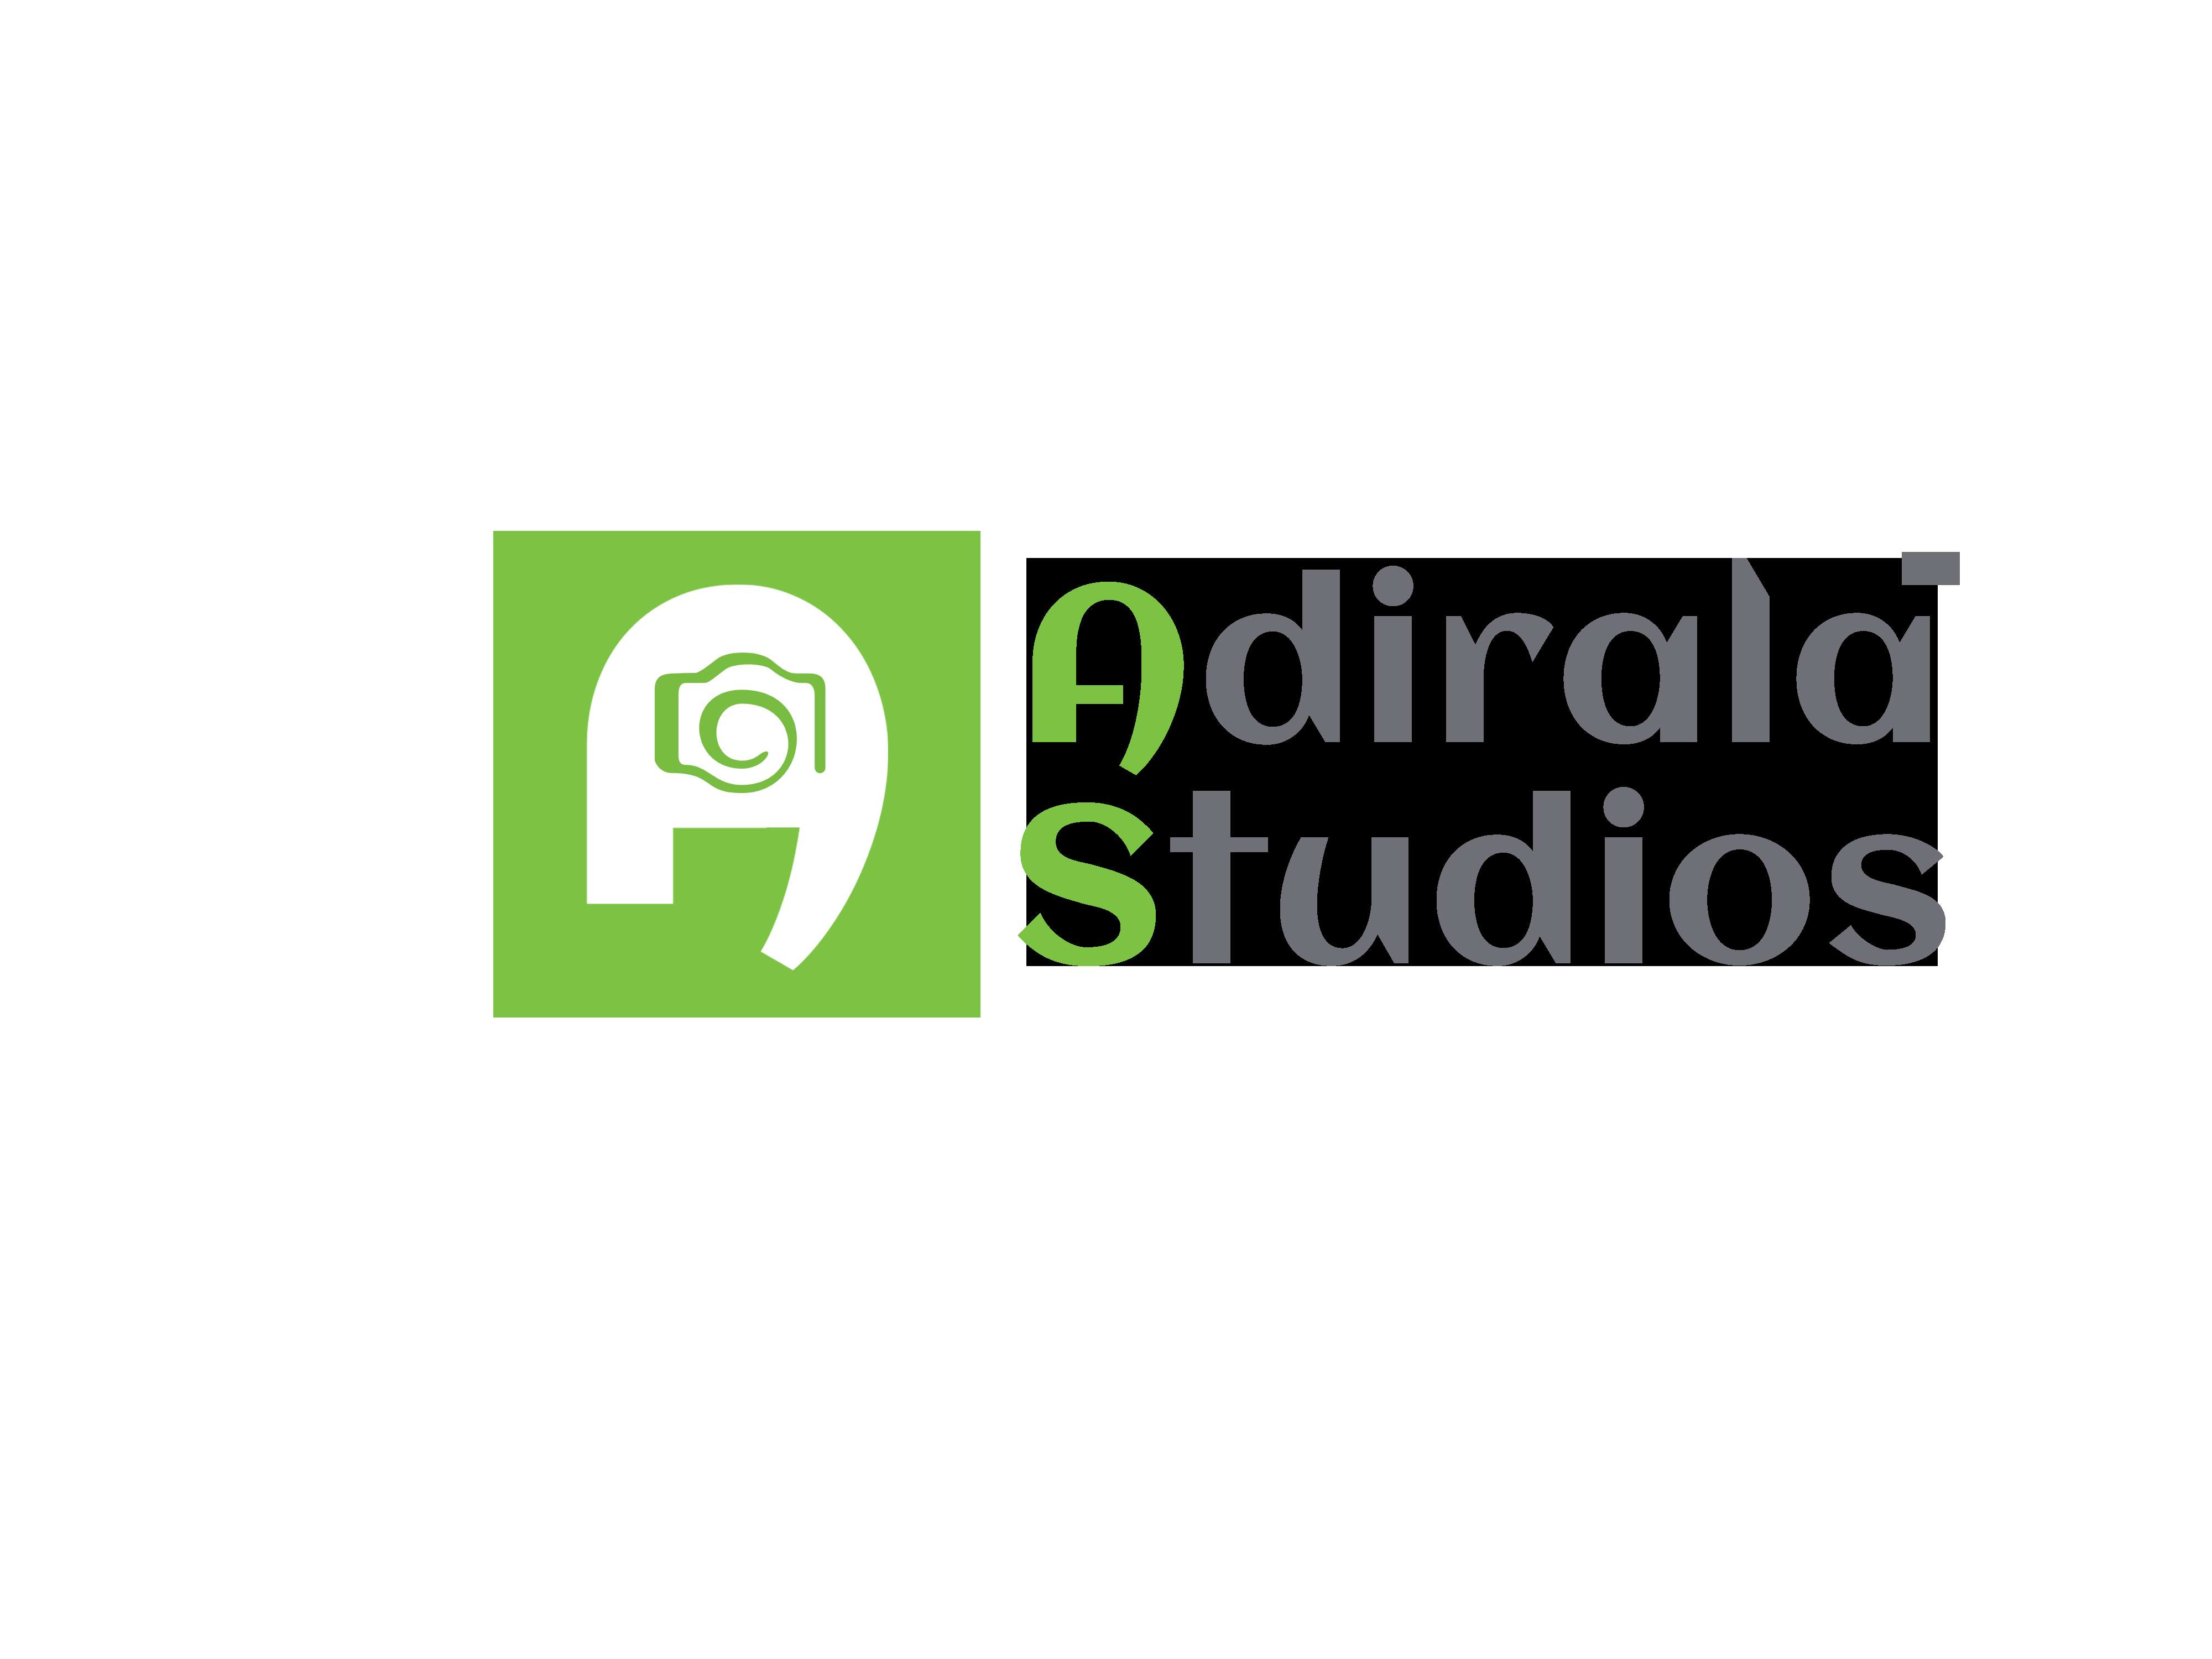 Adirala Studios